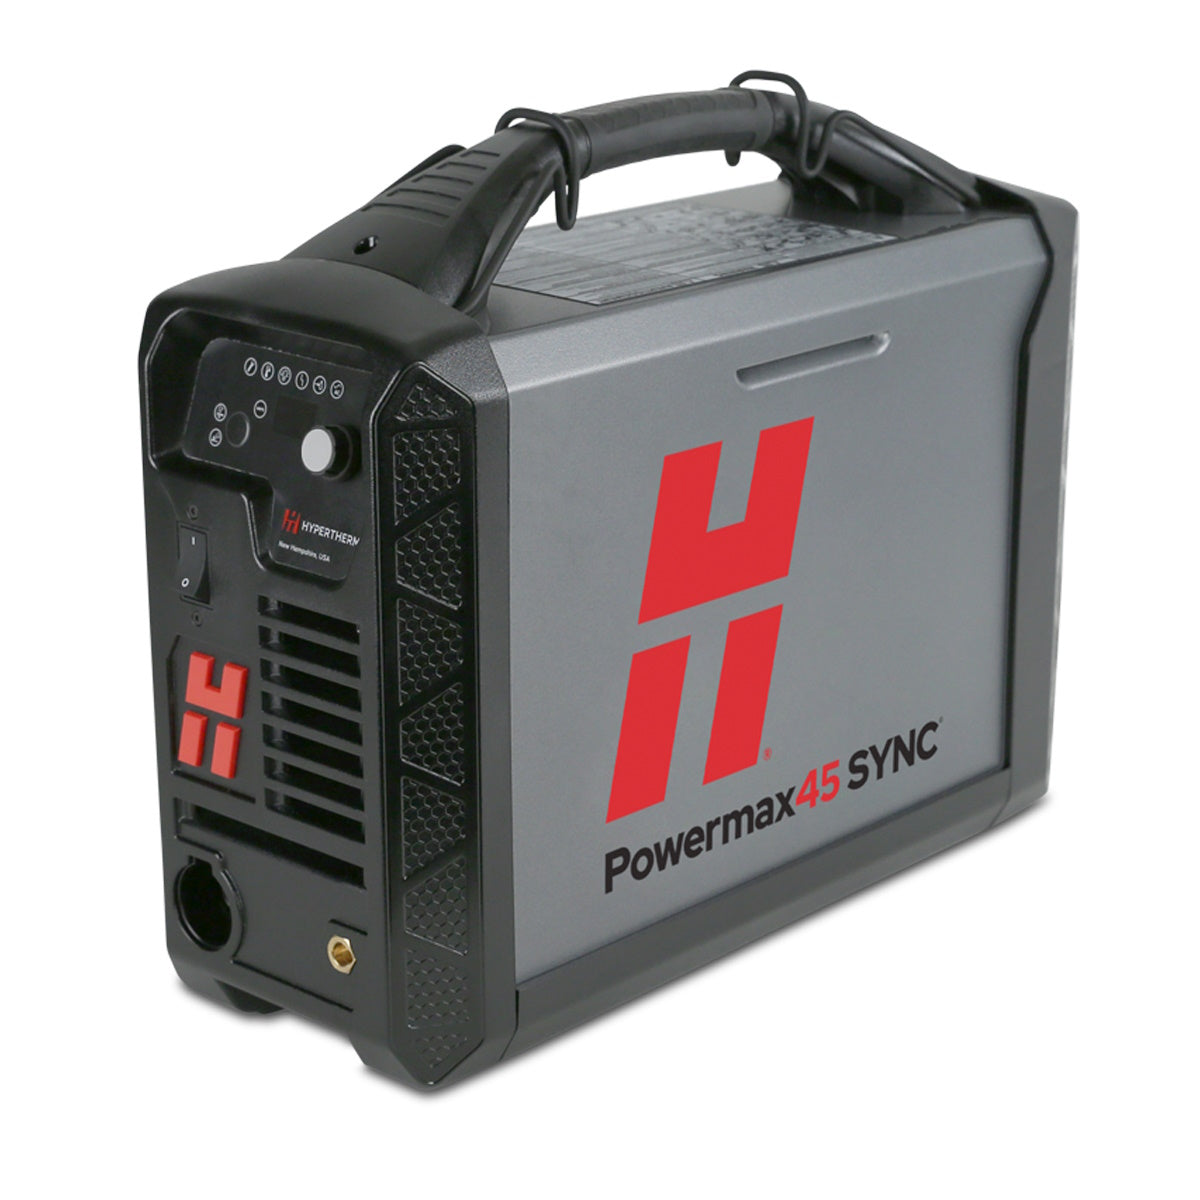 Hypertherm Powermax45 SYNC Plasma Cutter w/CPC 20ft Hand Torch (088562)